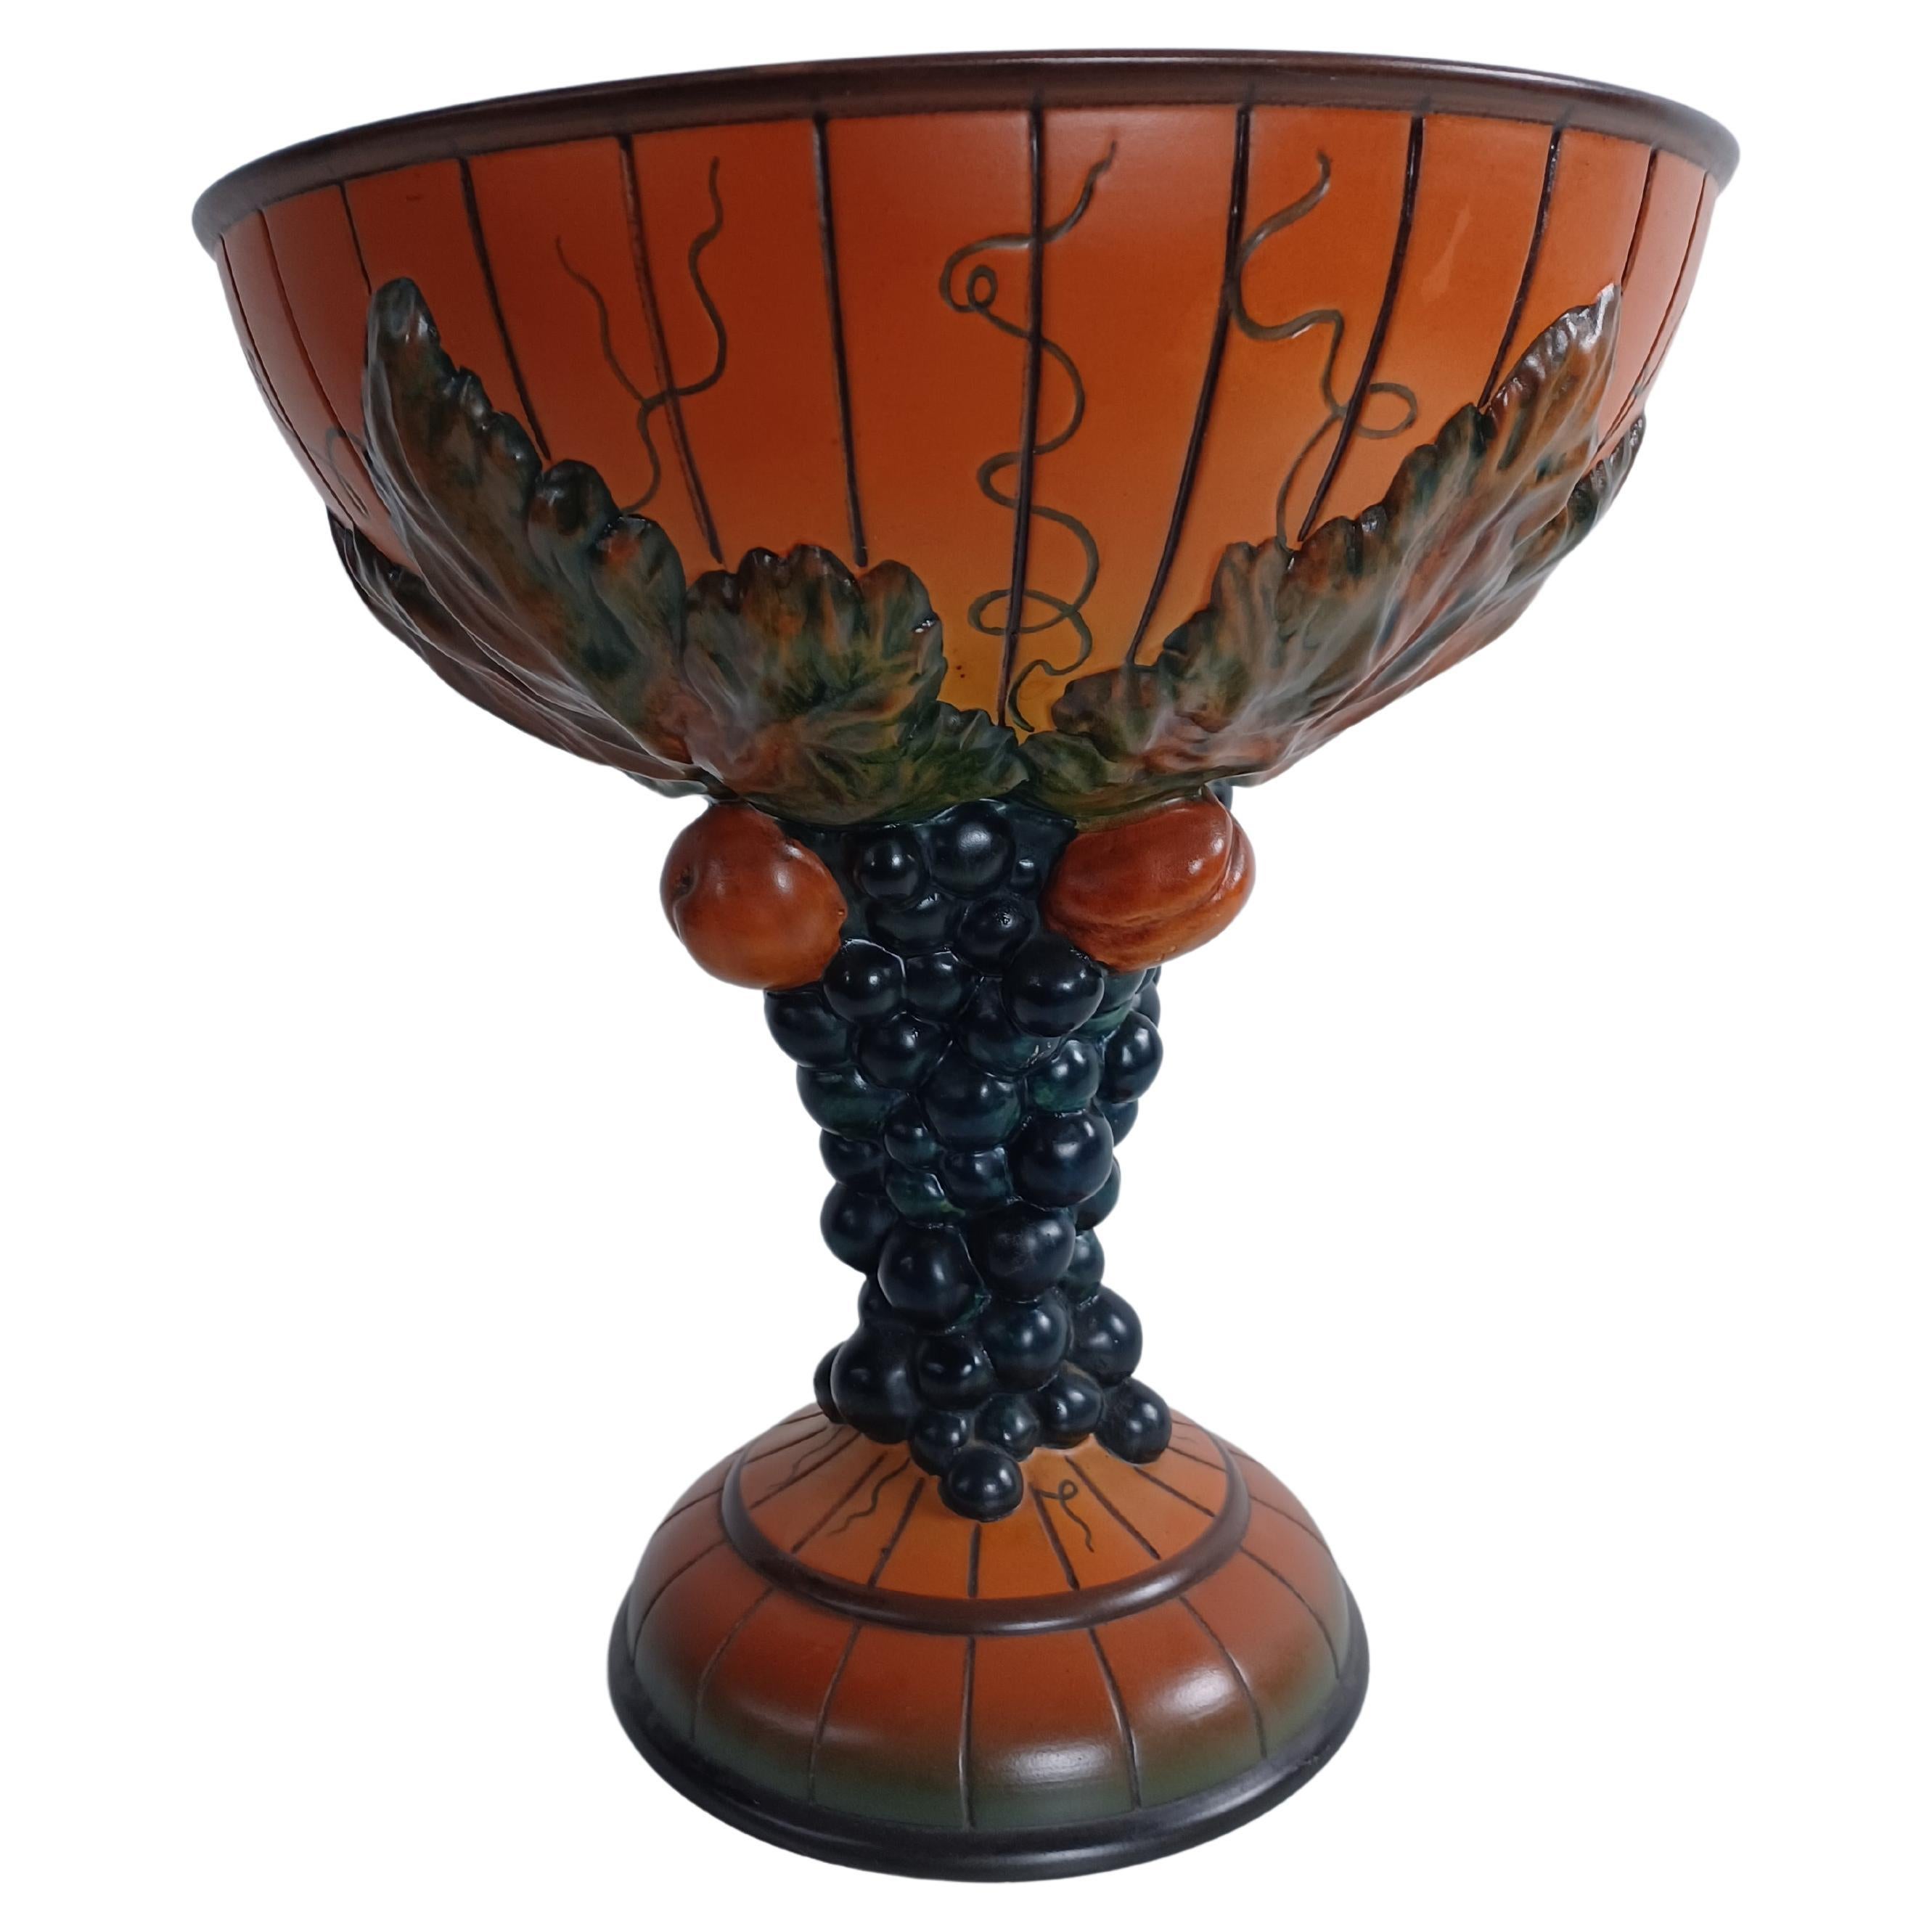 1920´s Art Nouveau Hand Crafted Grape Bowl by Erik Magnussen for P. Ipsens Enke